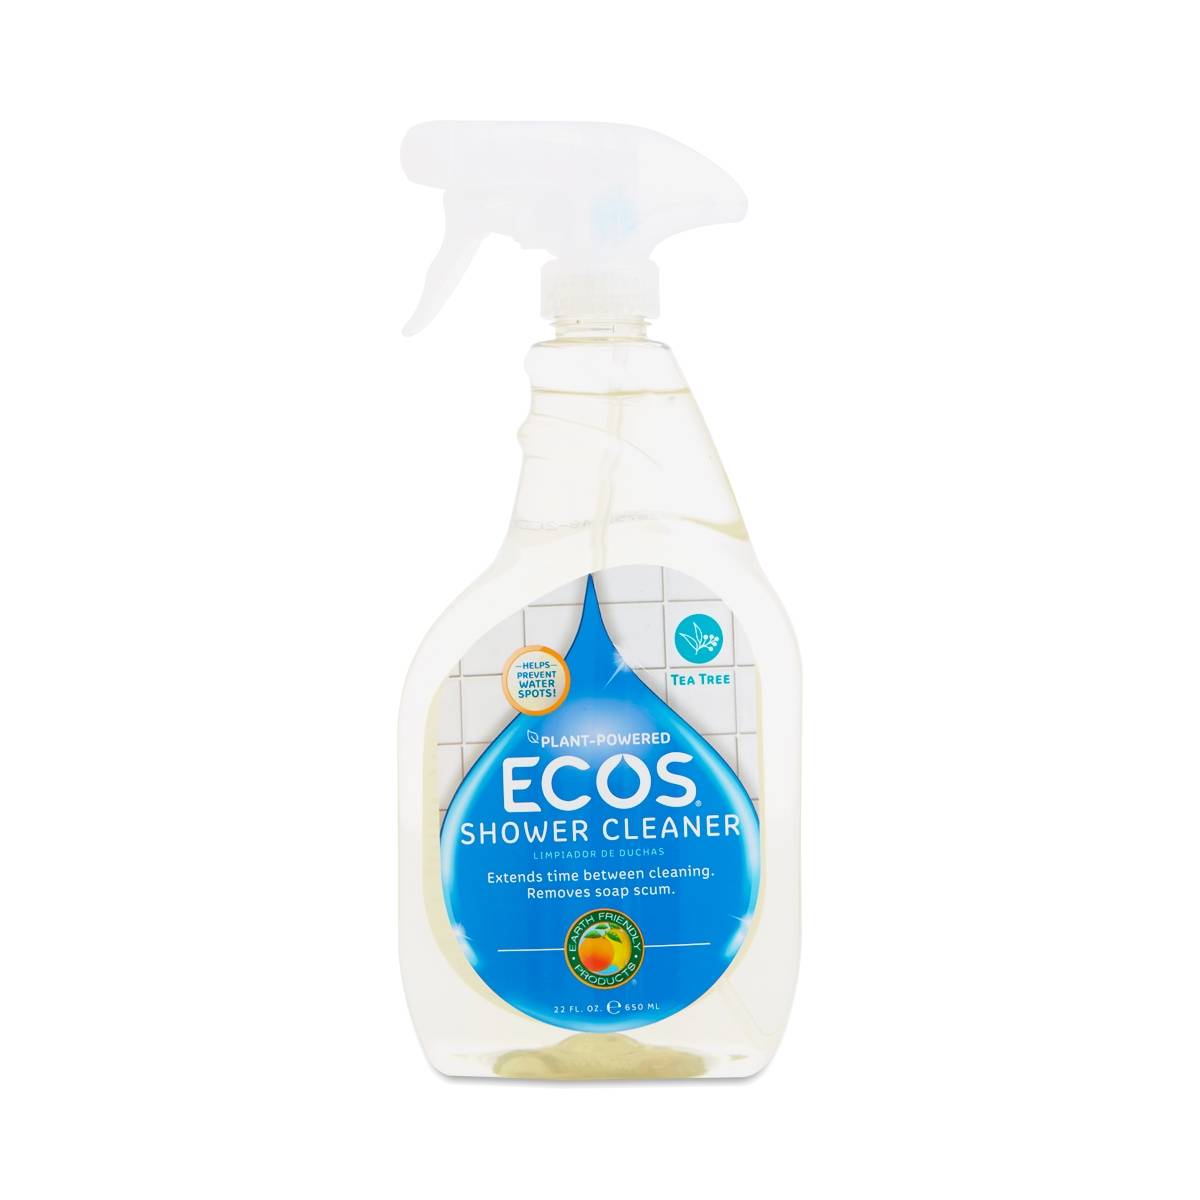 Ecos Shower Cleaner